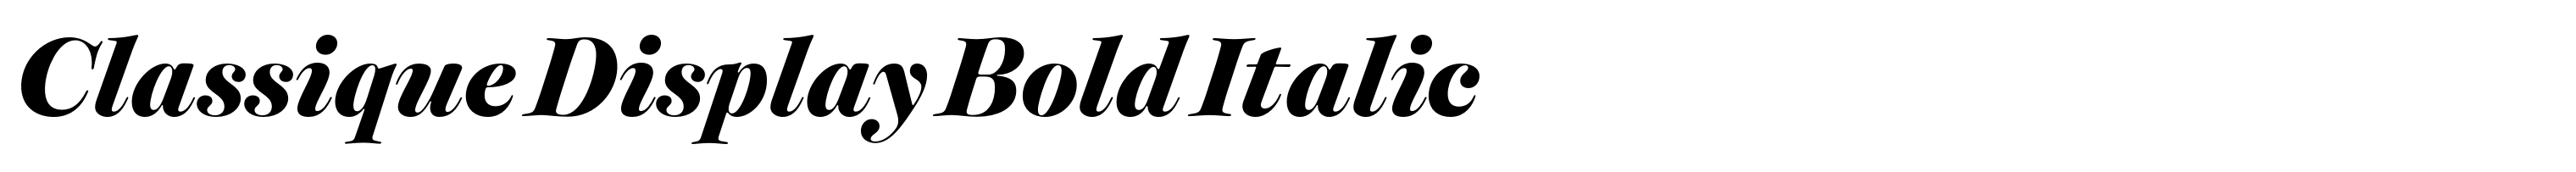 Classique Display Bold Italic